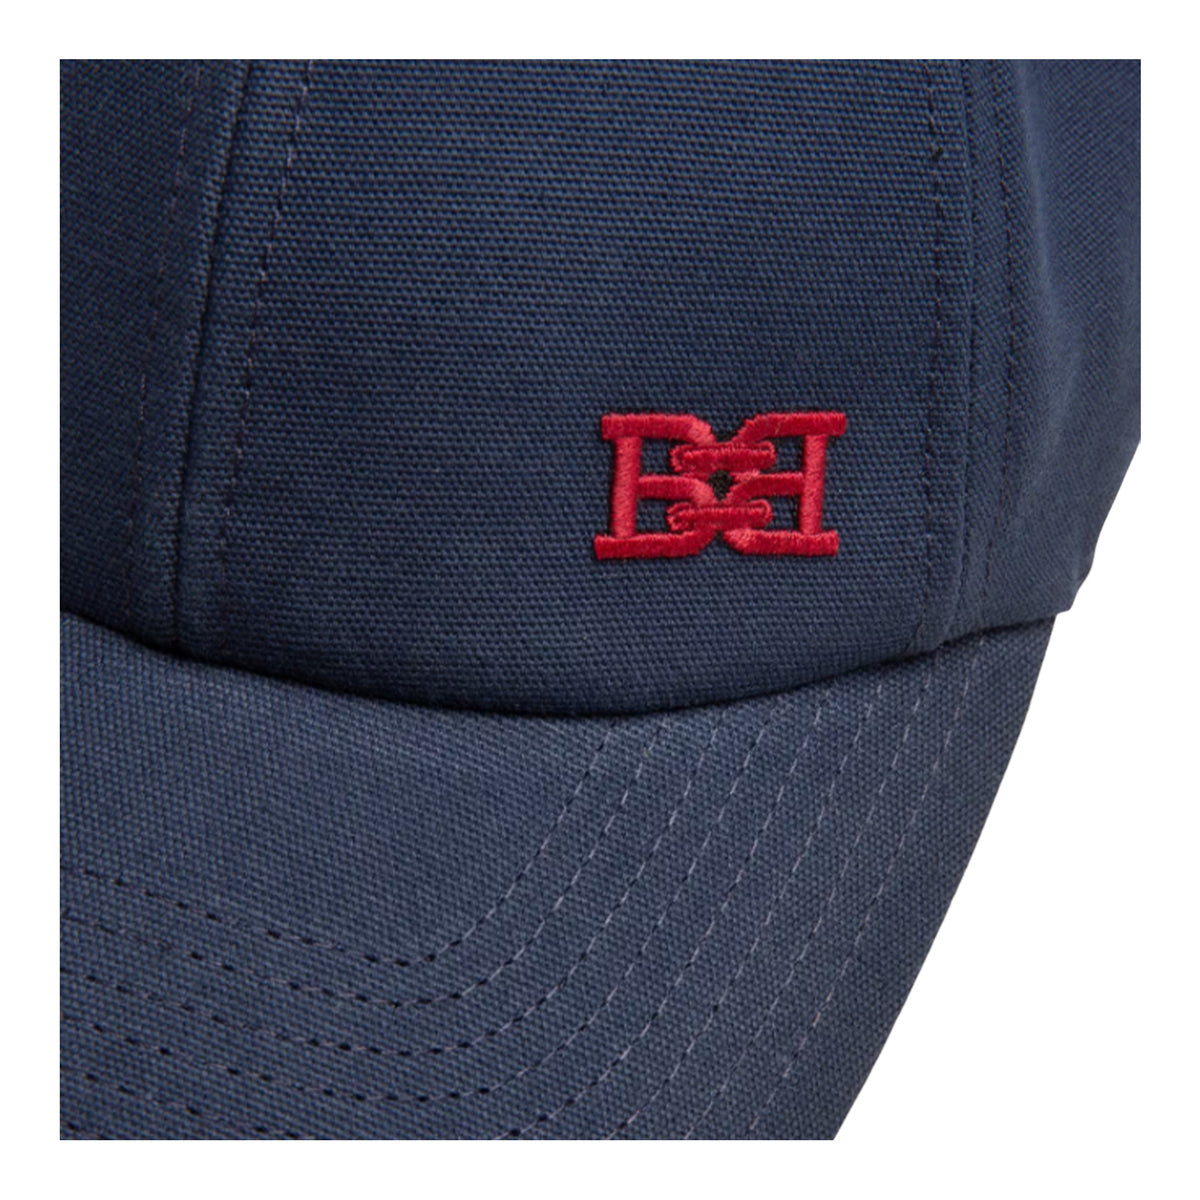 Bally B-Chain Embroidered Baseball Cap